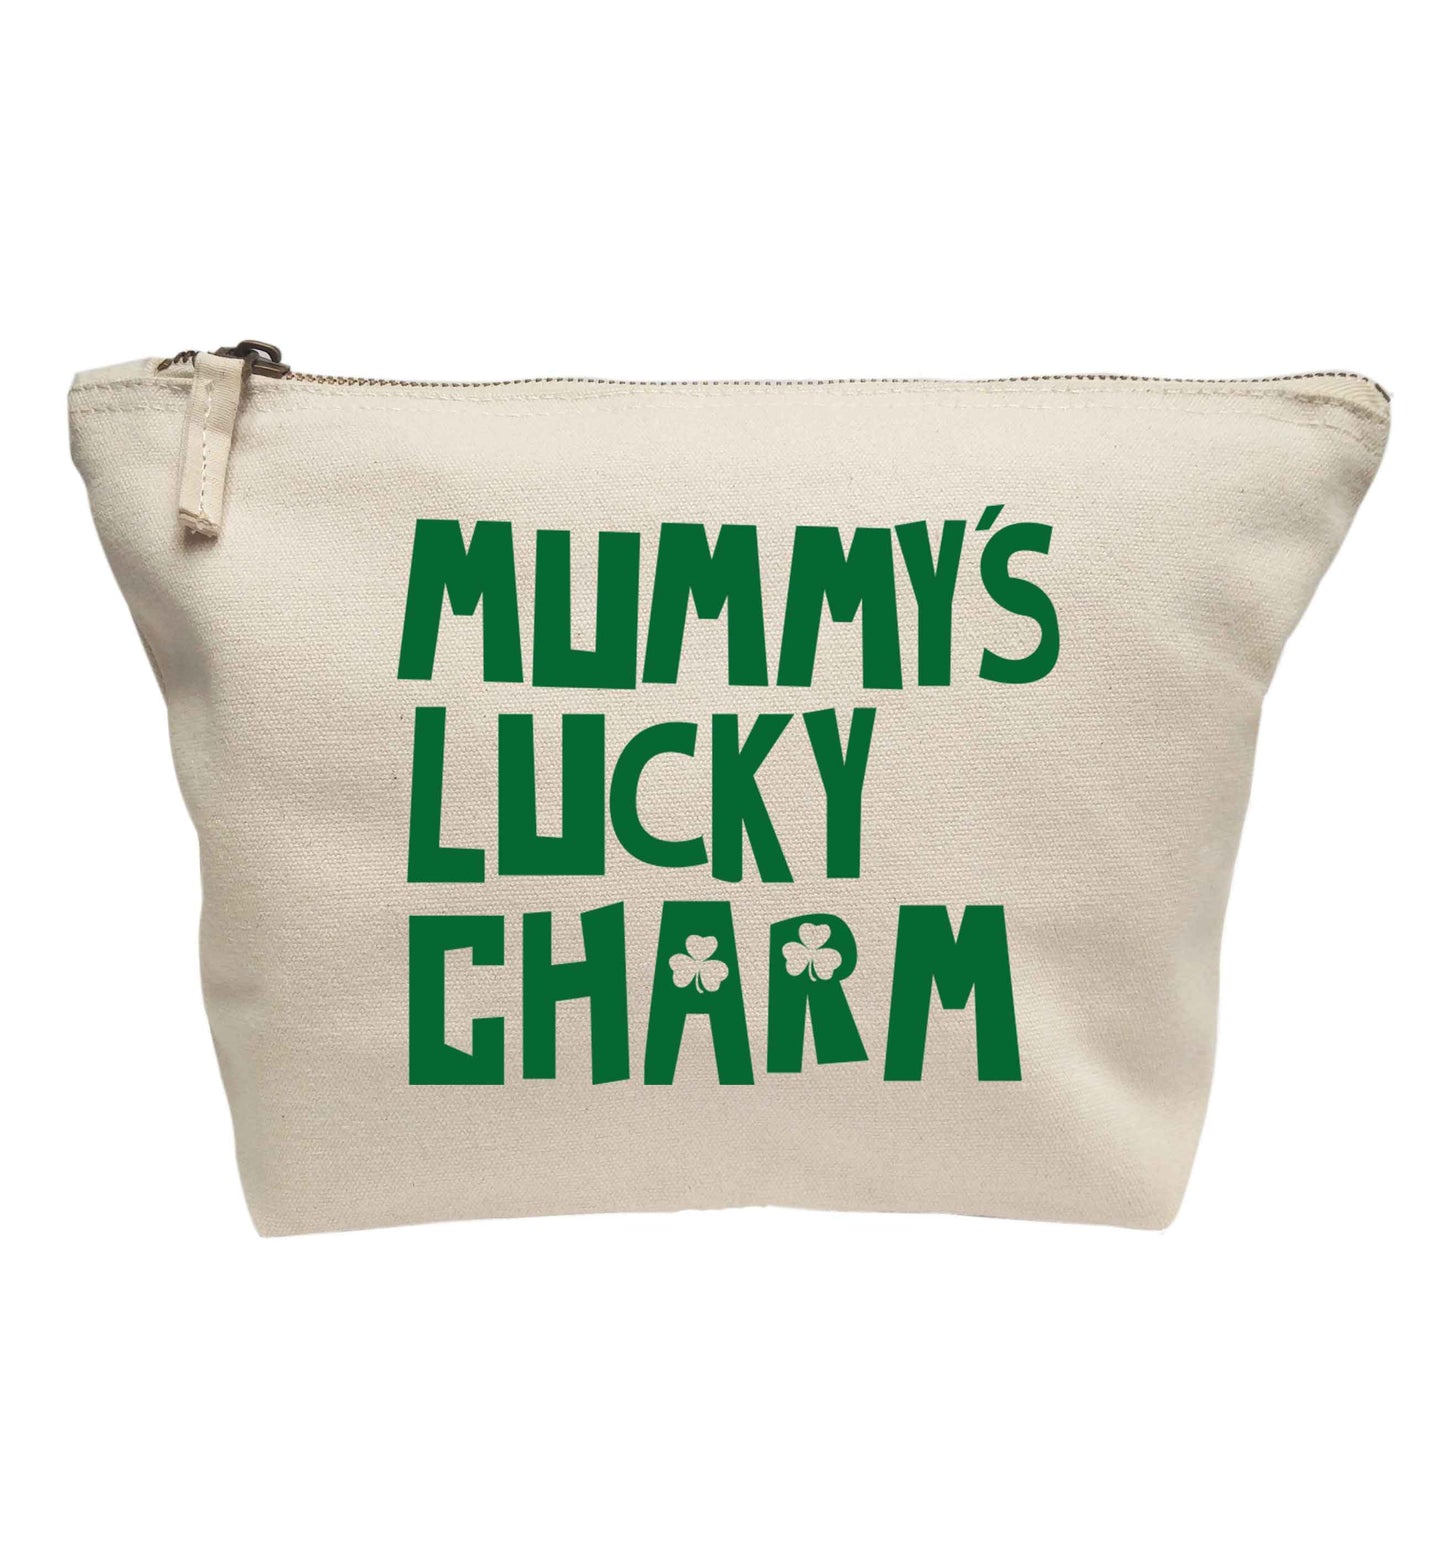 Mummy's lucky charm | Makeup / wash bag